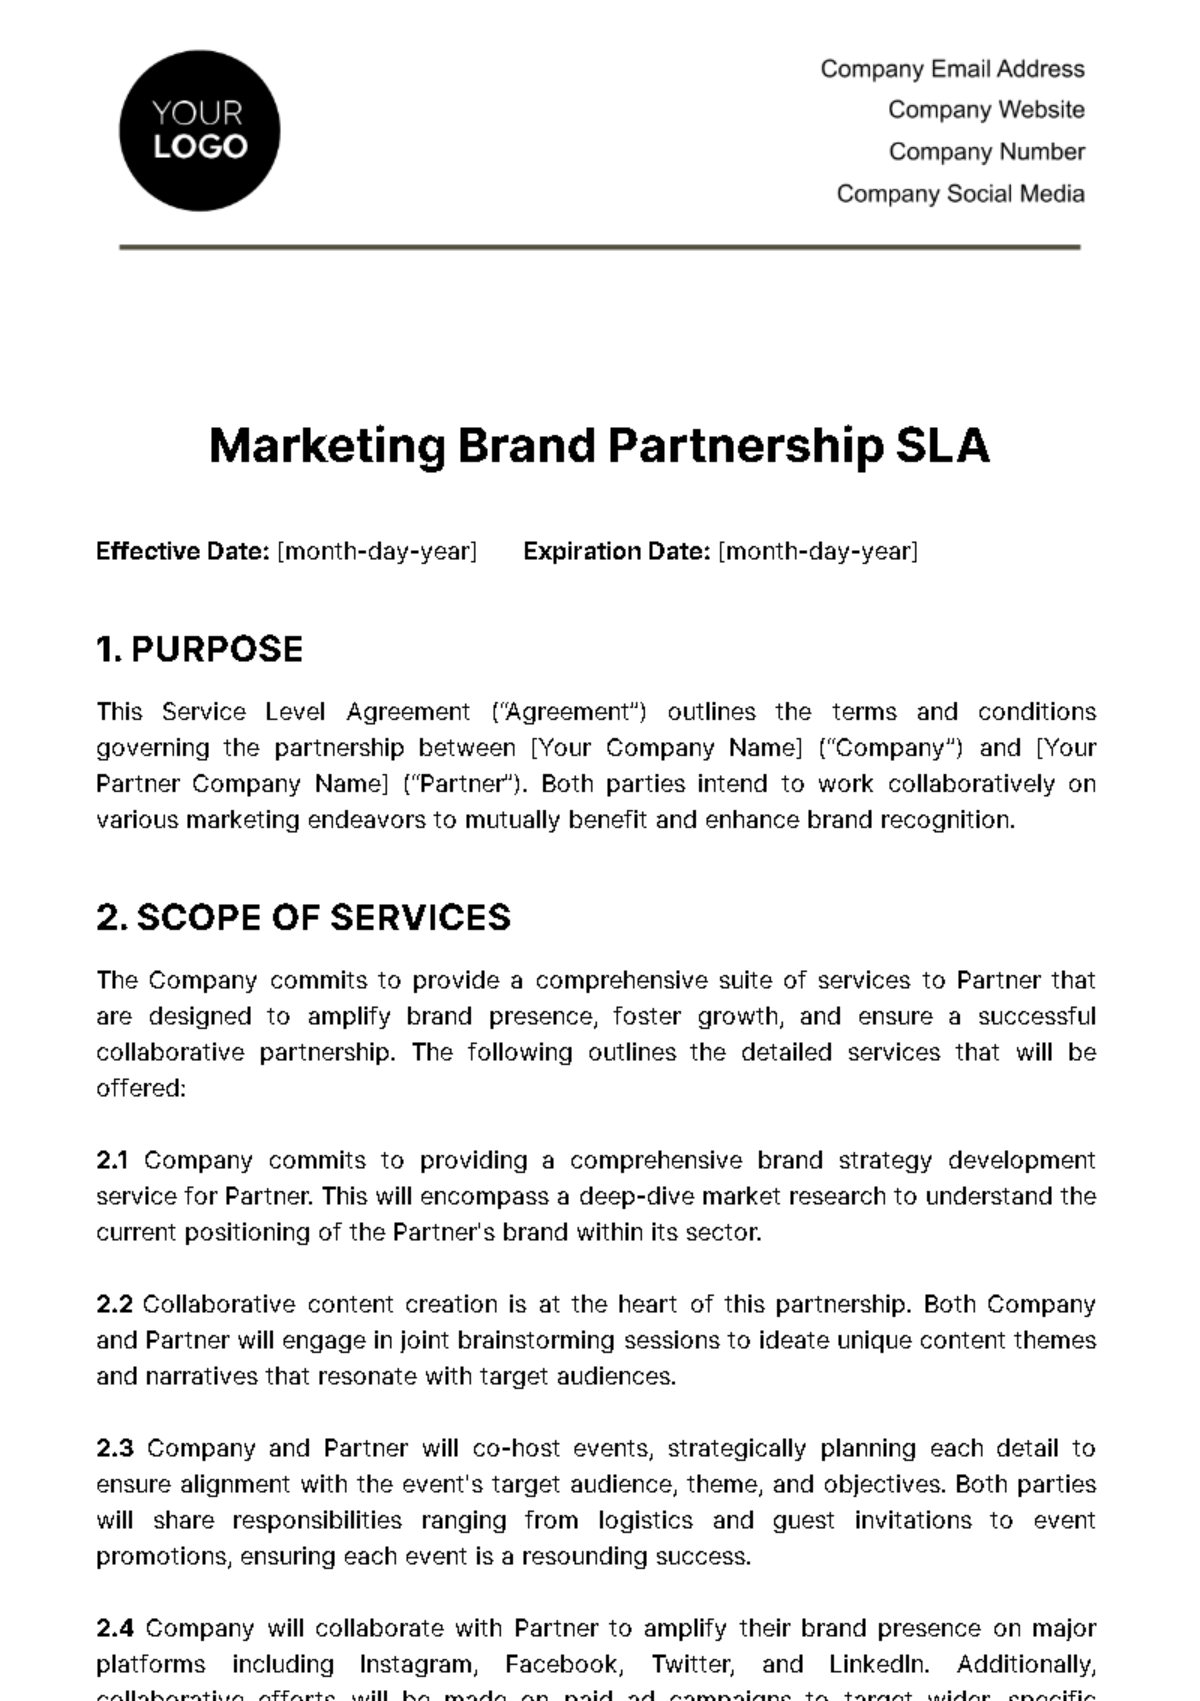 Marketing Brand Partnership SLA Template